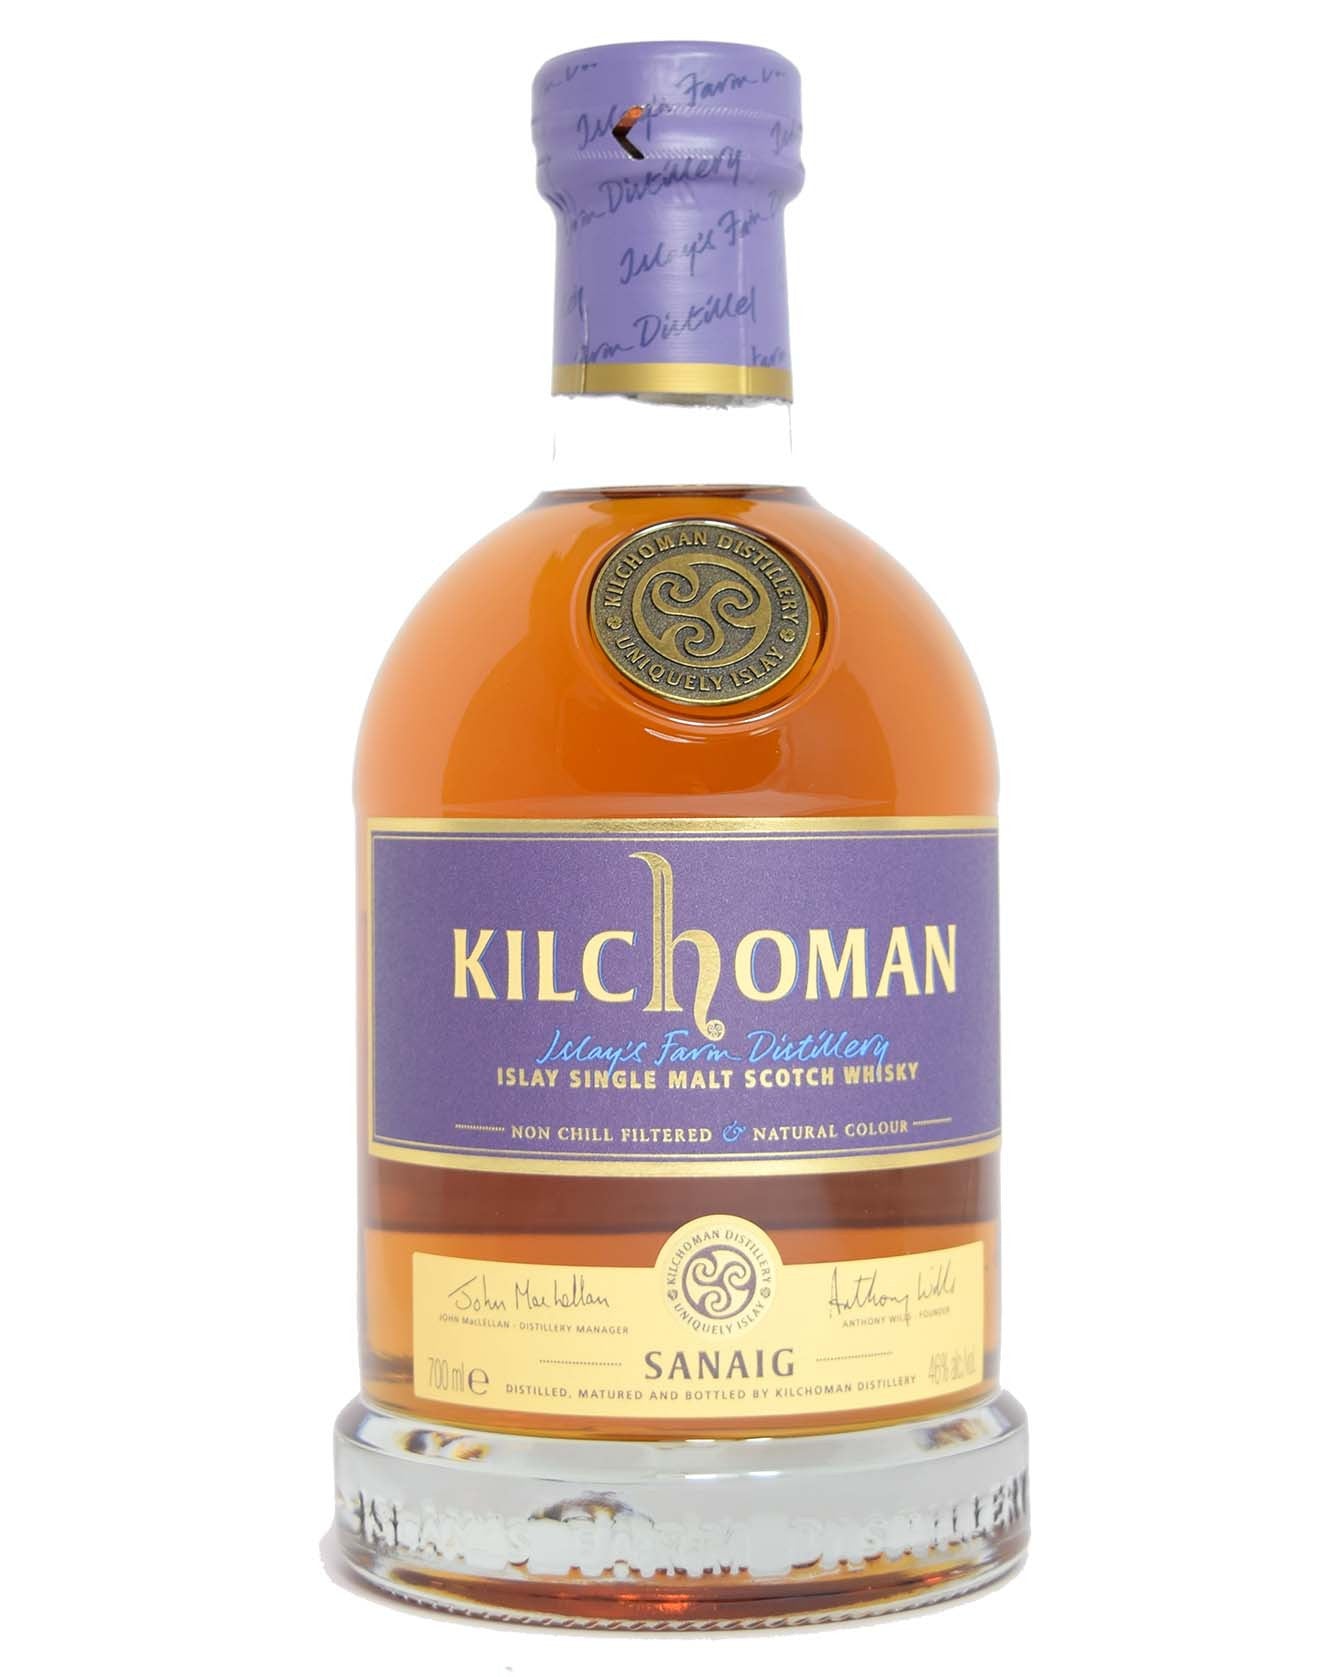 Kilchoman Sanaig - Whiski Shop